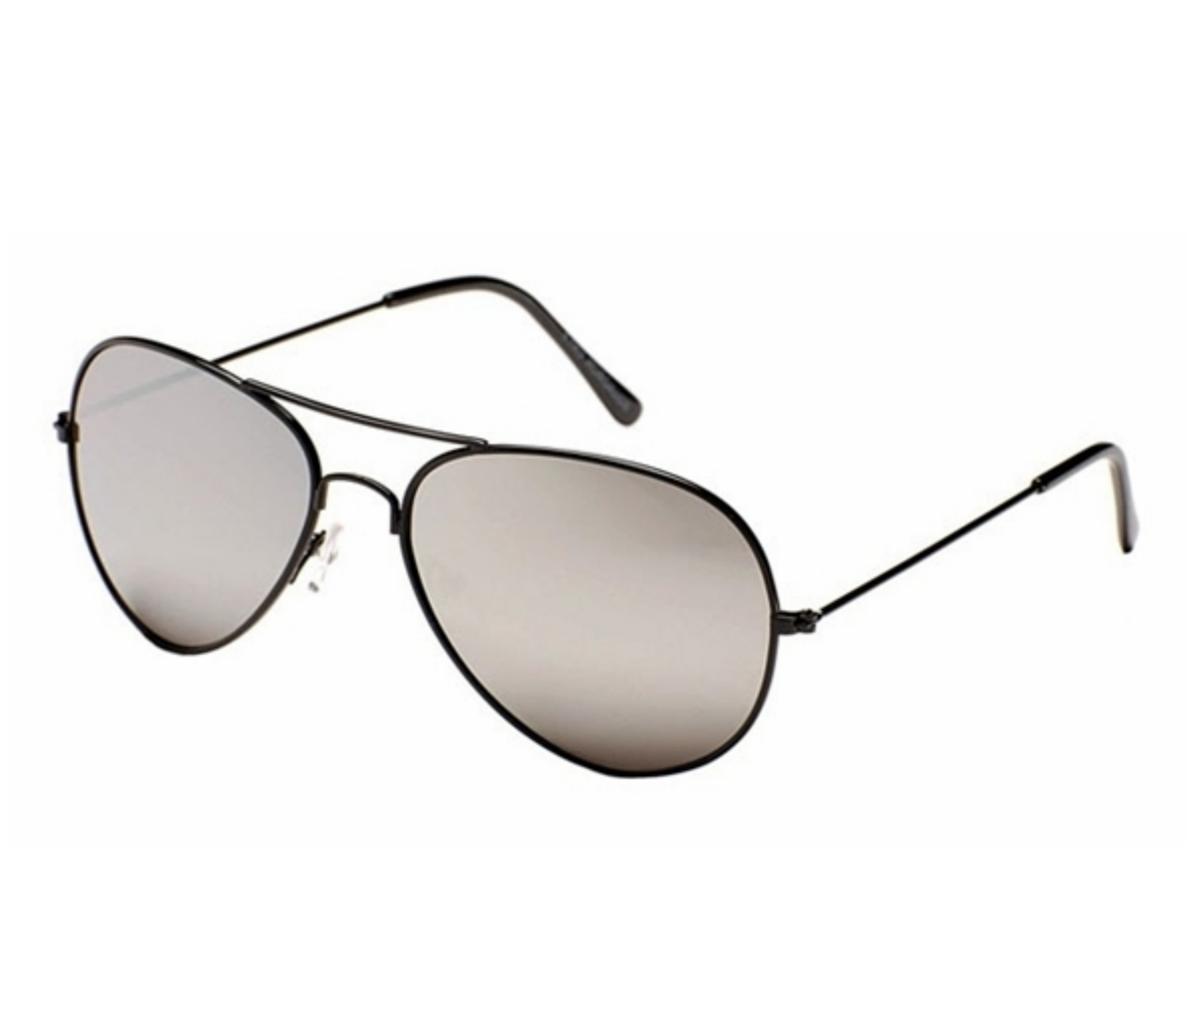 RETRO 80's Style Mirrored Black Aviator Sunglasses BNWT/NEW Vtg Style Glasses